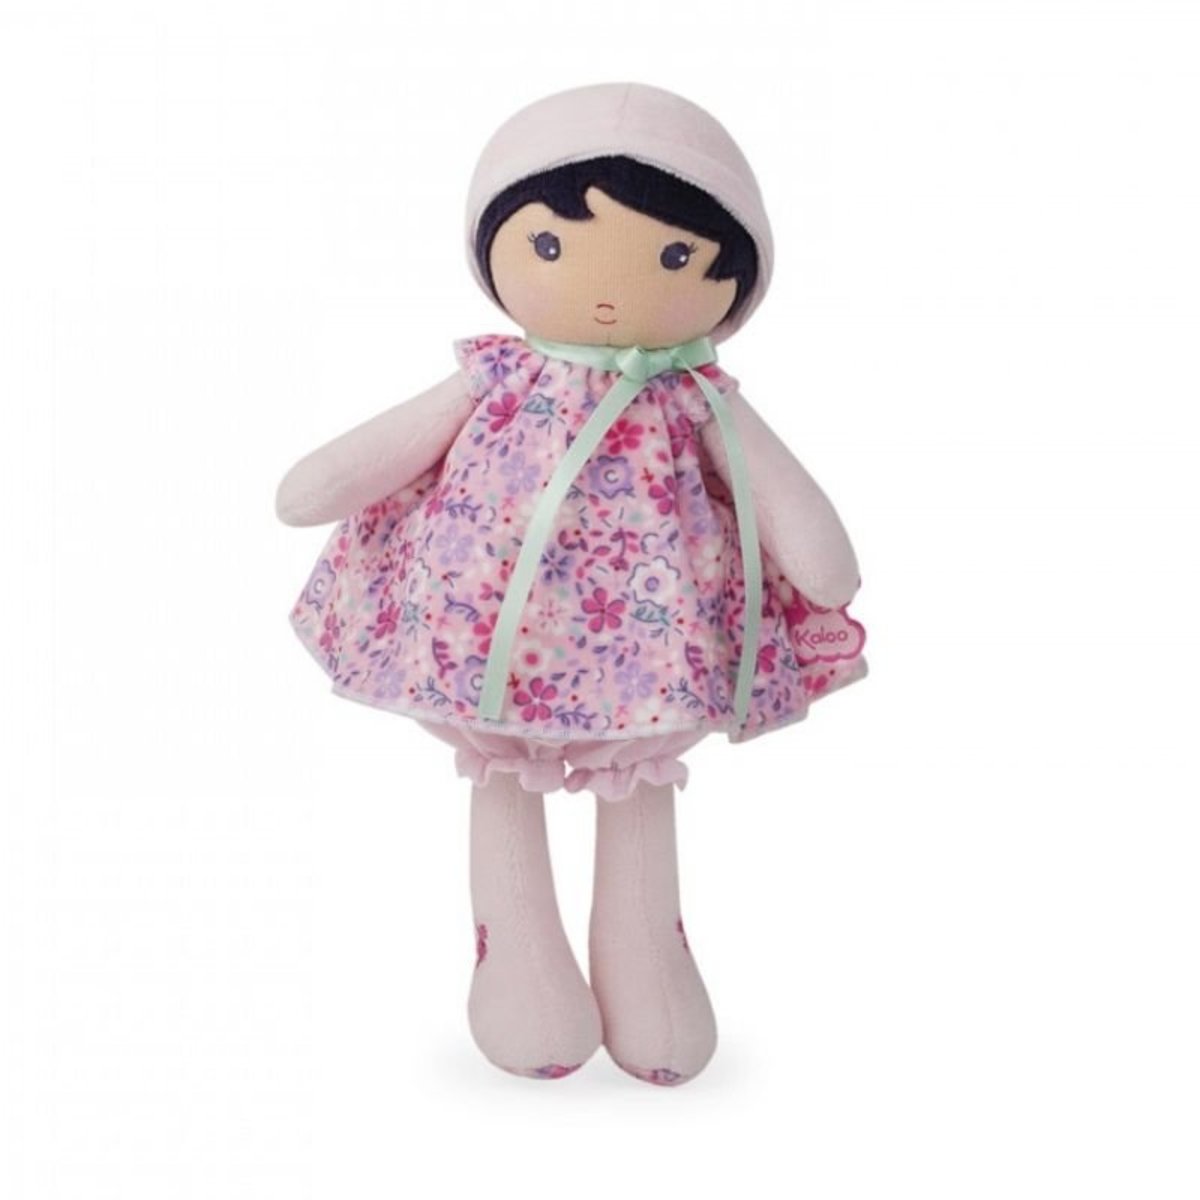 Tendresse Doll - Medium size Fleur